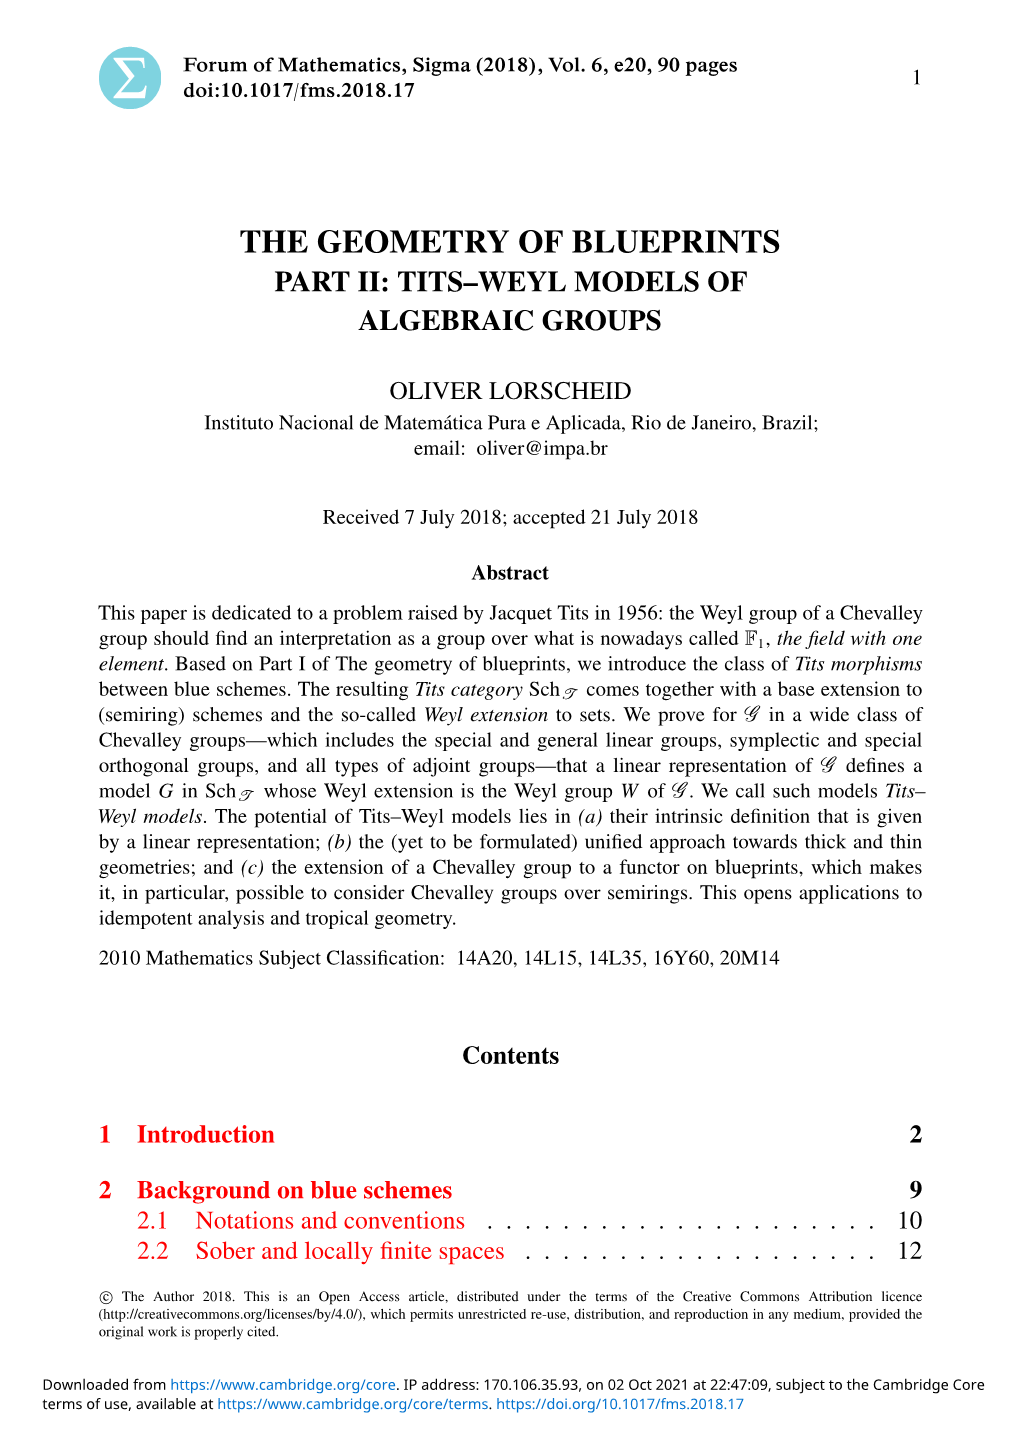 The Geometry of Blueprints Part Ii: Tits–Weyl Models of Algebraic Groups